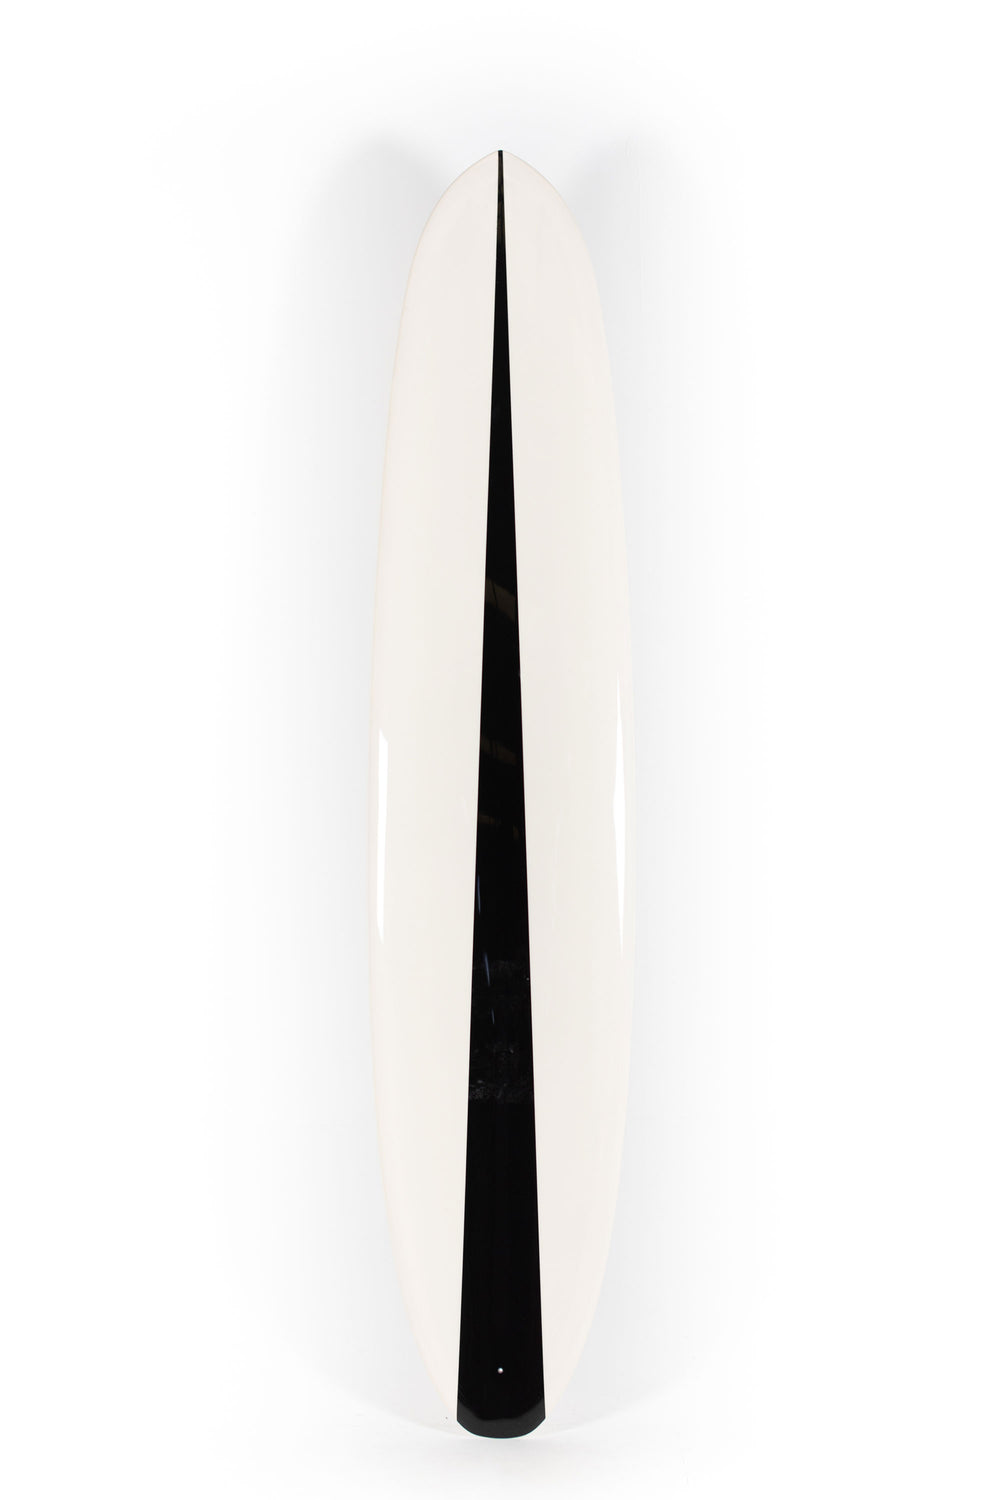 Pukas Surf Shop - Christenson Surfboard  - BANDITO by Chris Christenson - 9'0” x 22 1/2 x 2 13/16 - CX03179